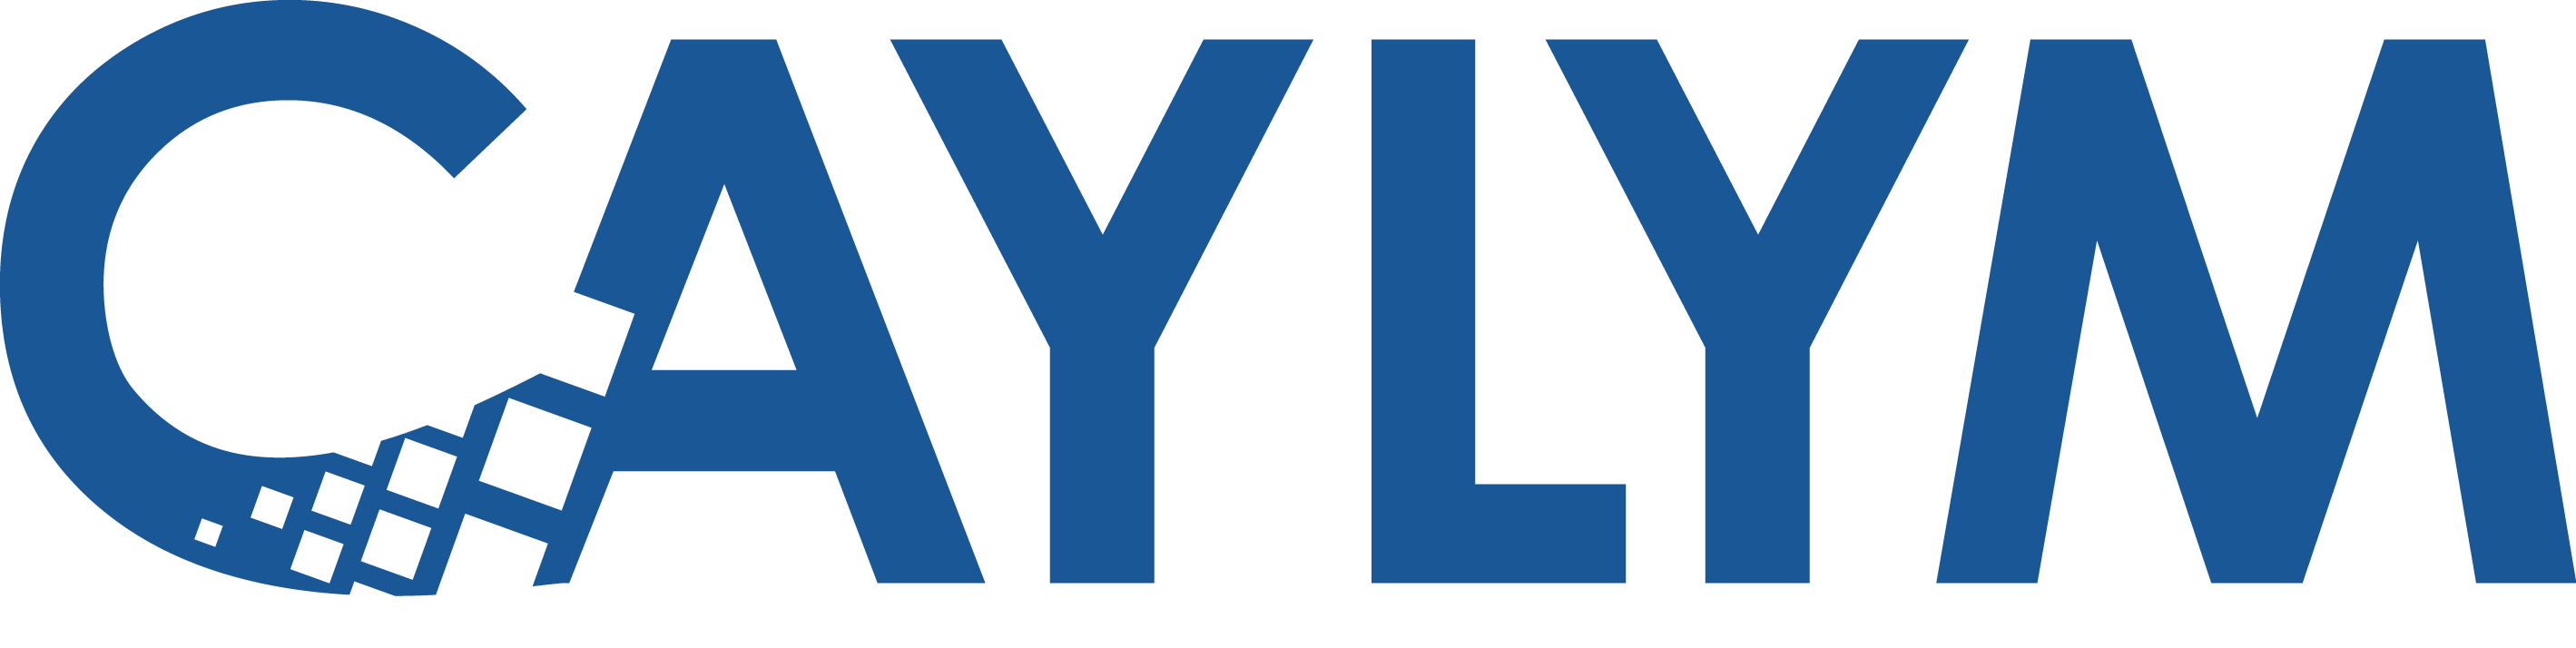 Caylym Technologies